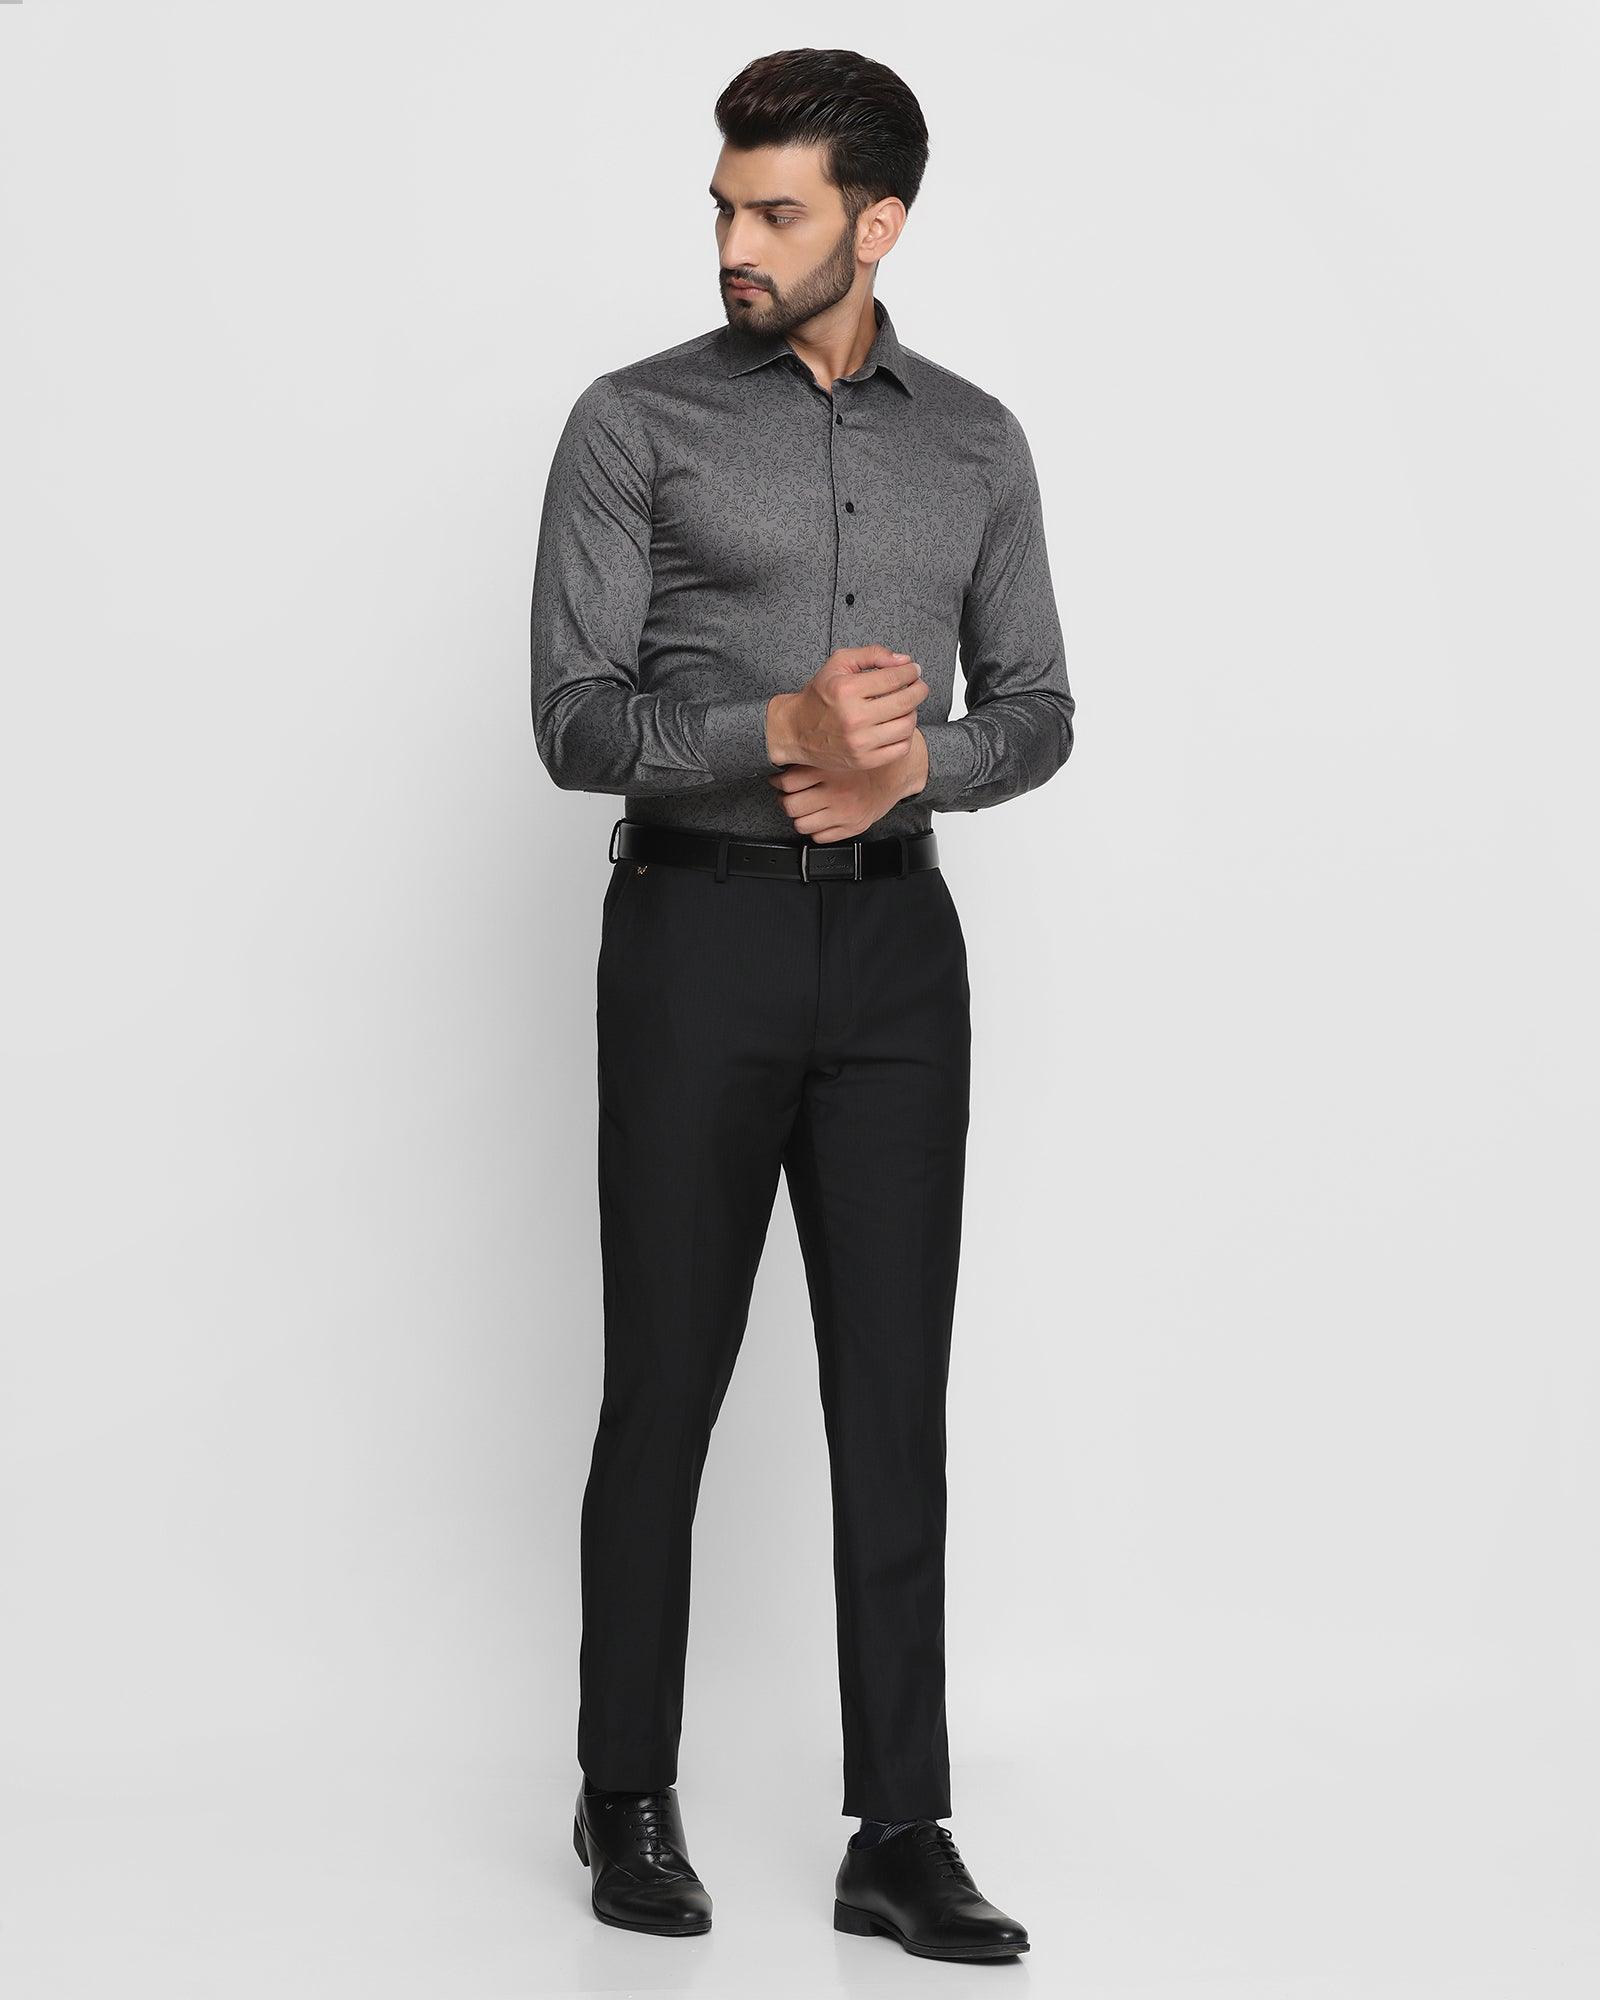 Formal Black Printed Shirt - Kellen